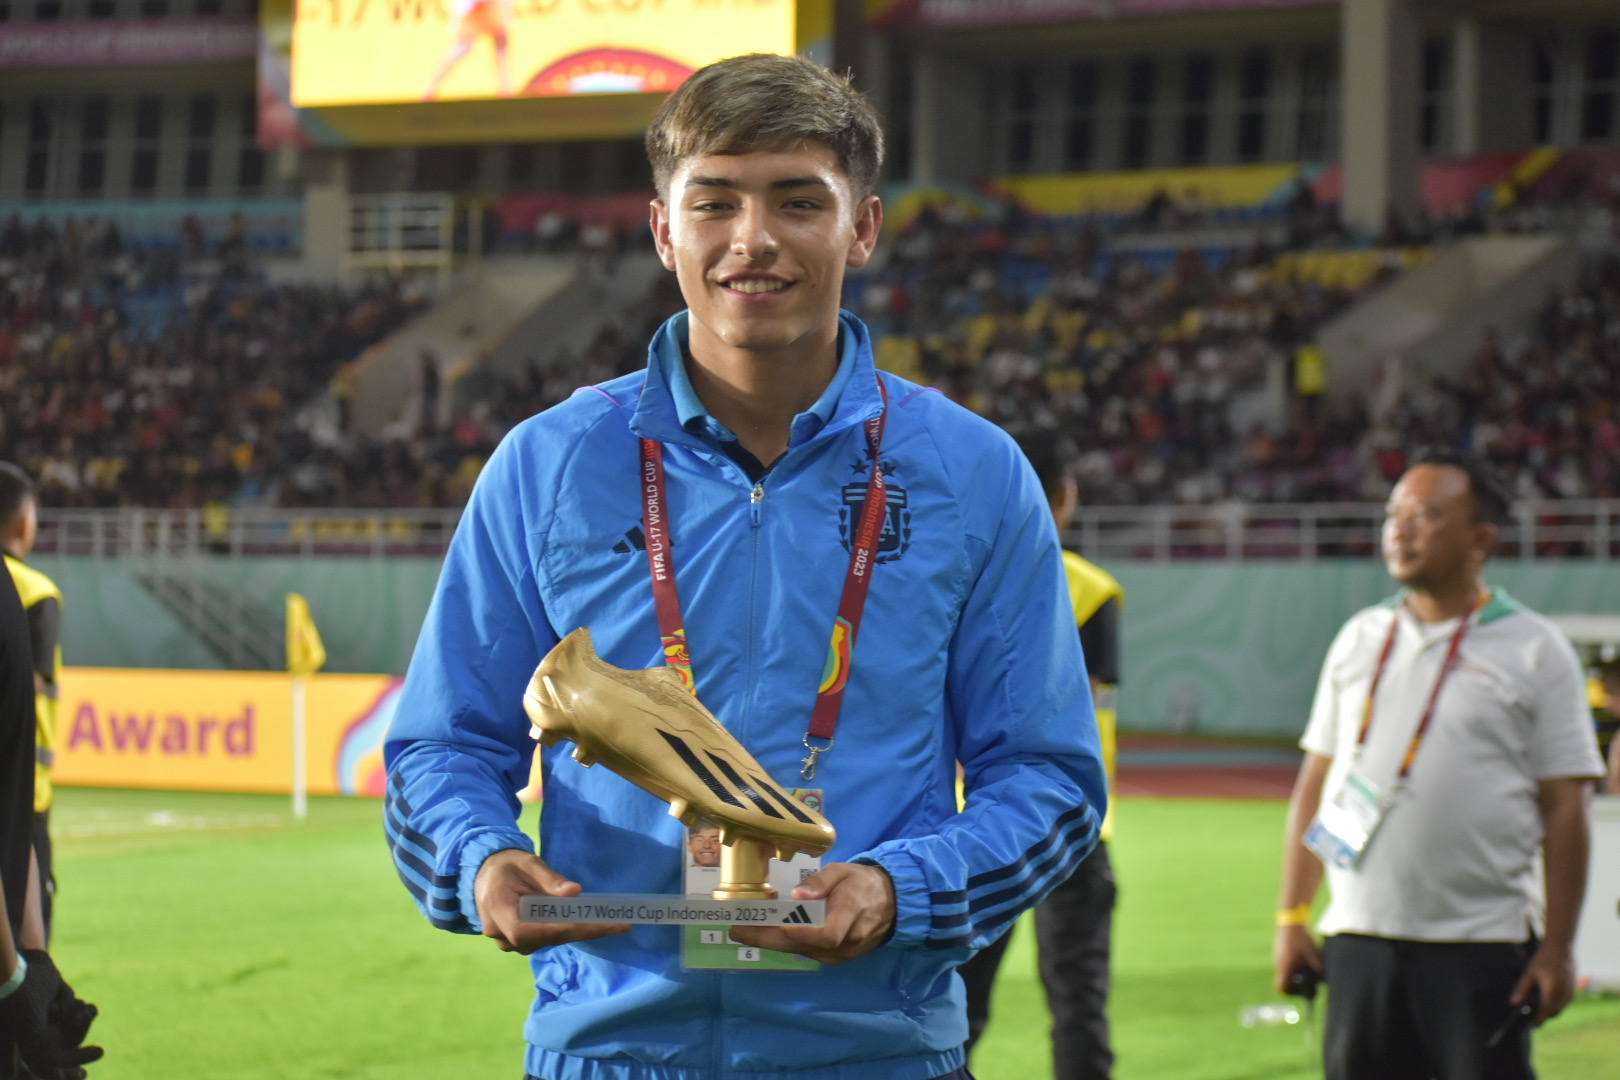 Ruberto ganó la Bota de Oro al máximo goleador del Mundial Sub-17 | Canal Showsport